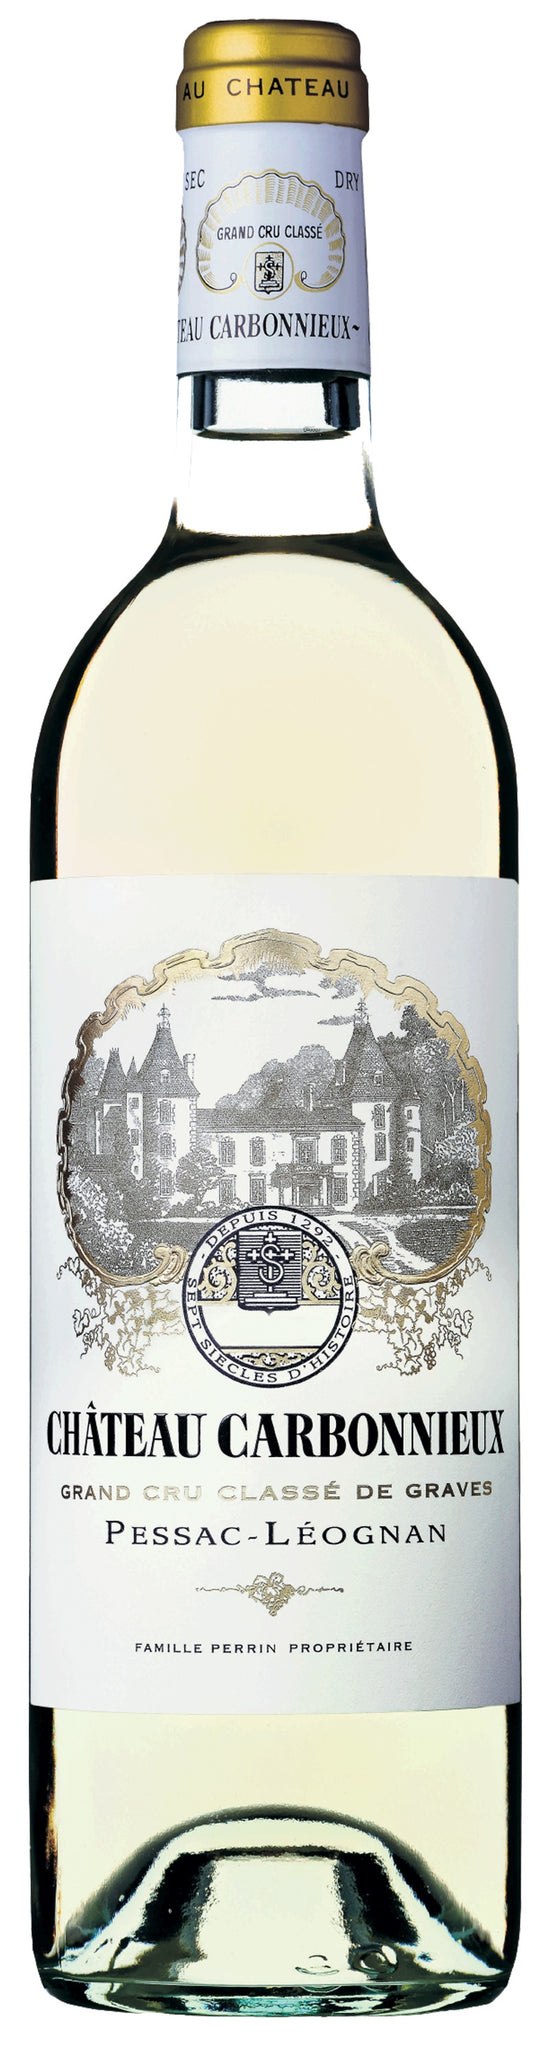 Chateau Olivier Pessac-Leognan Blanc 2018 – Wine Chateau